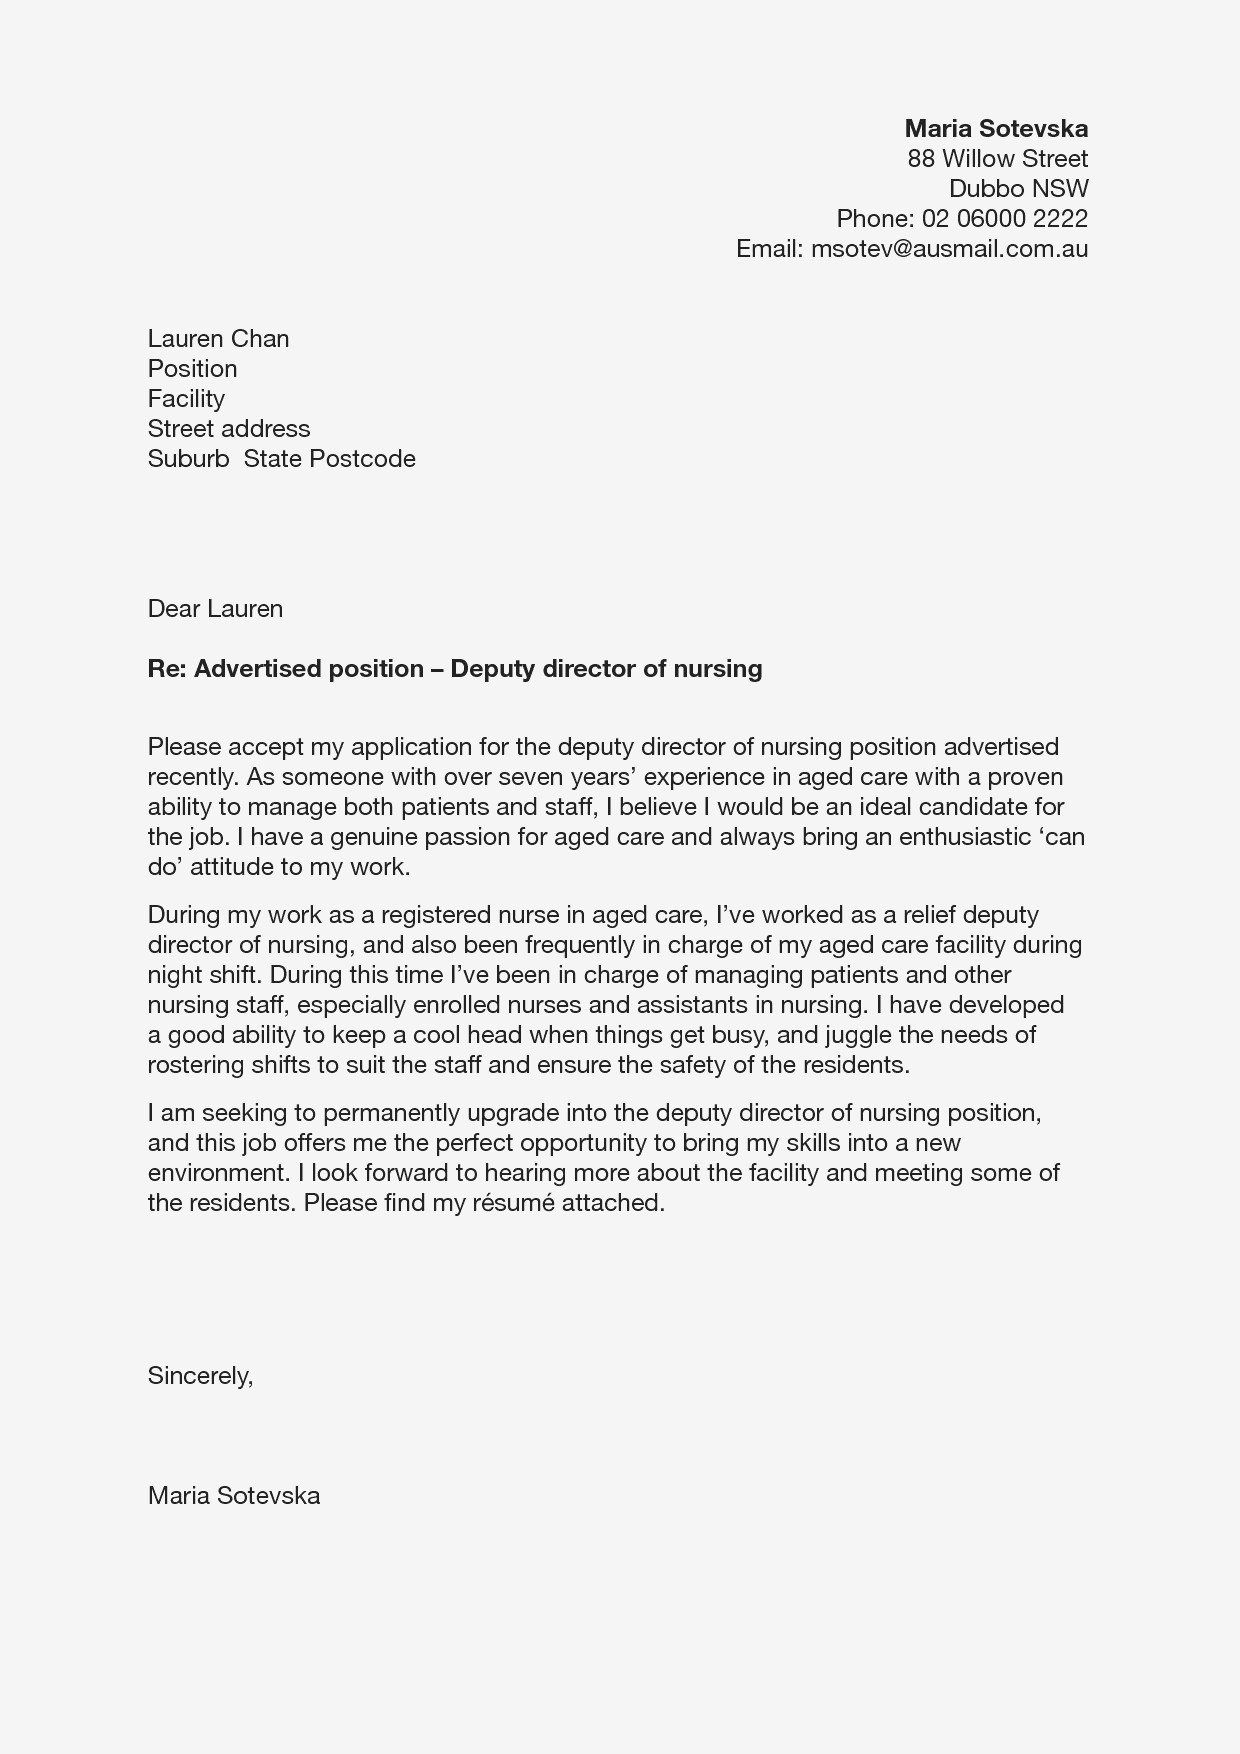 Resignation Letter Switzerland - Dwight Hamnet